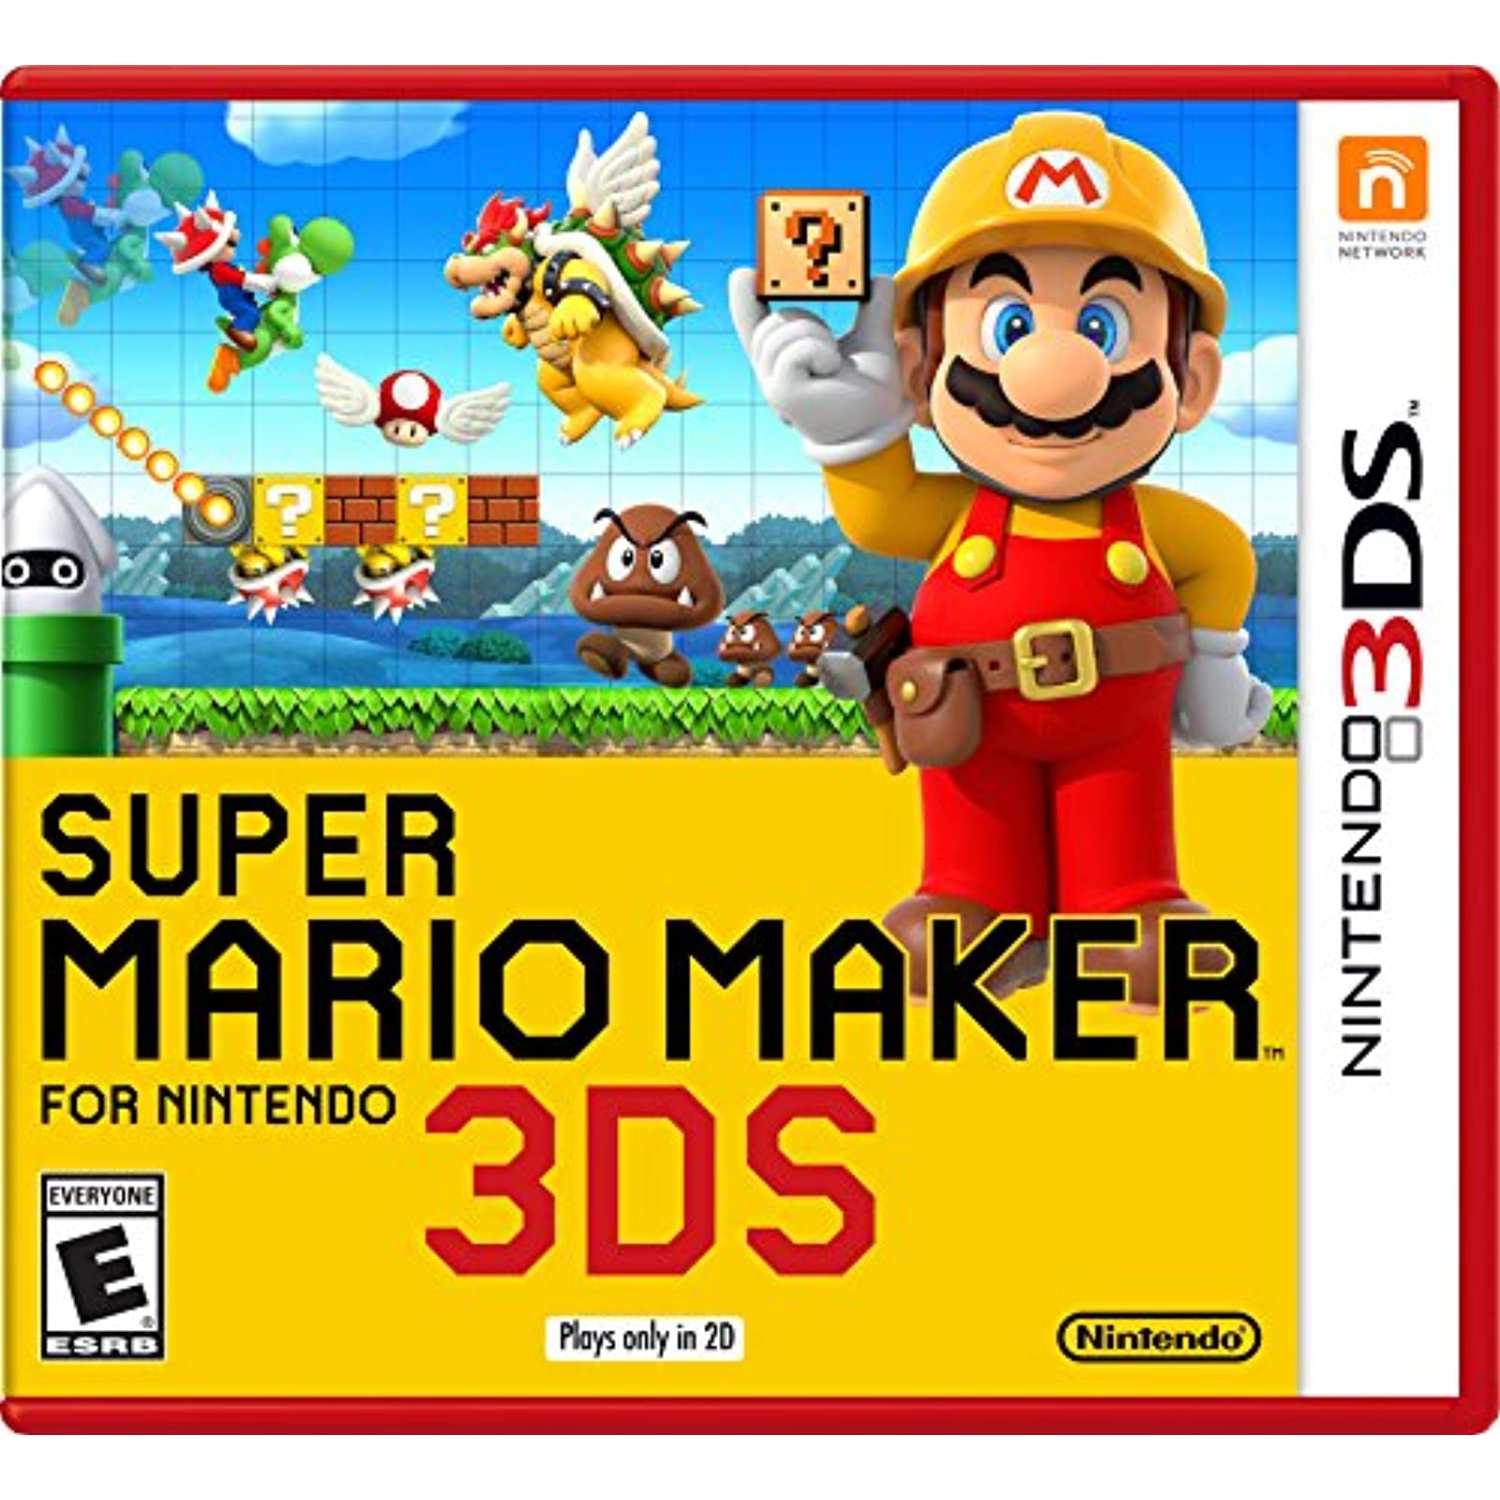 Previously Played - Super Mario Maker For Nintendo Nintendo For 3DS